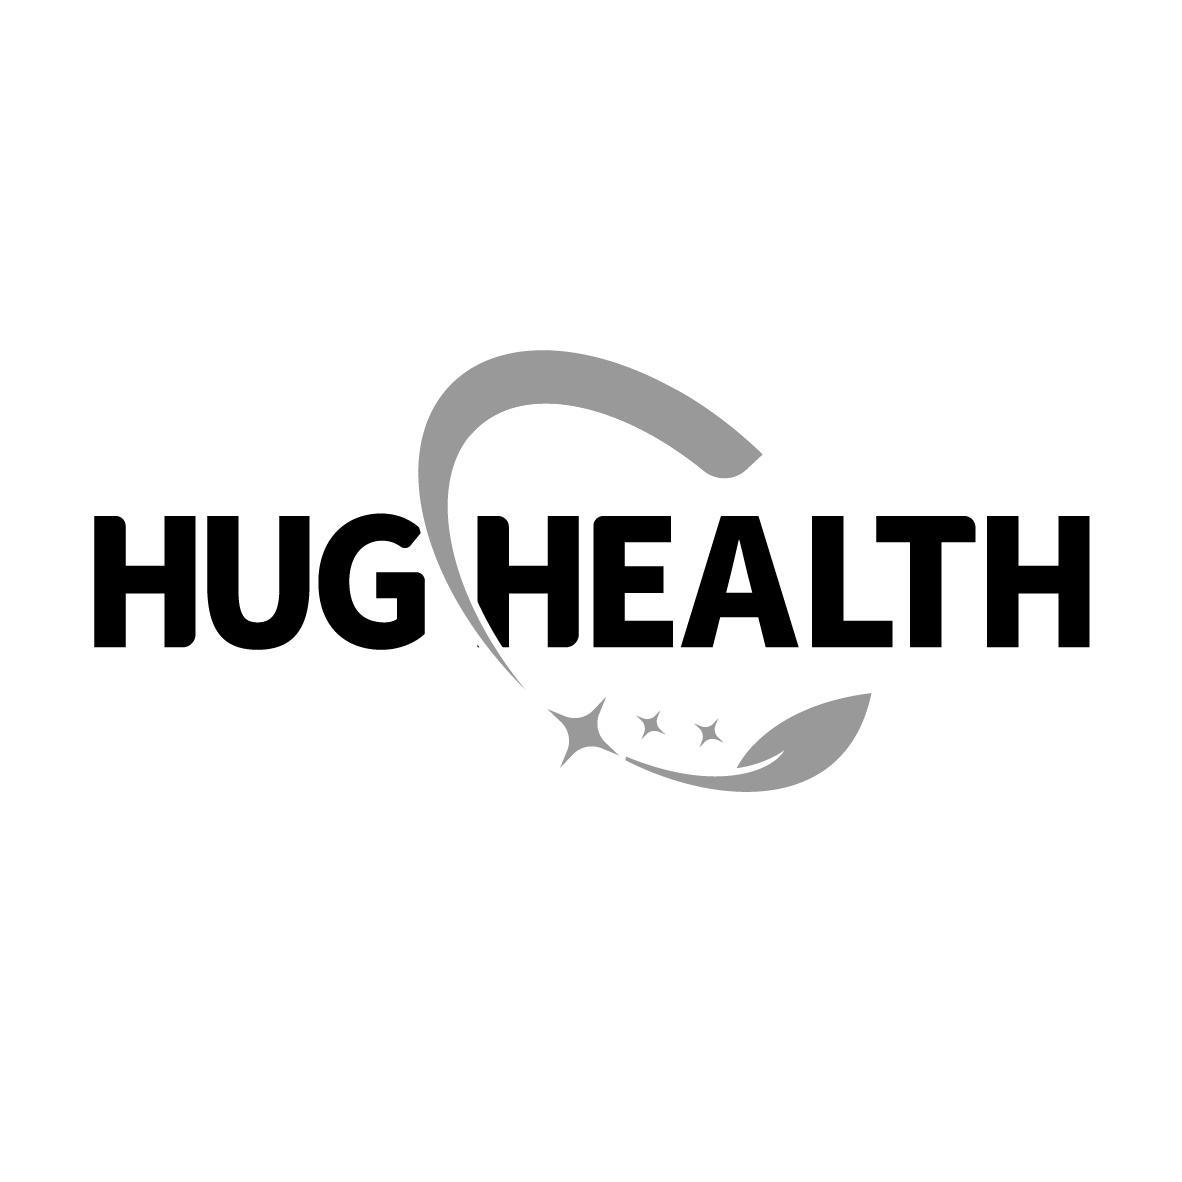 HUG HEALTH